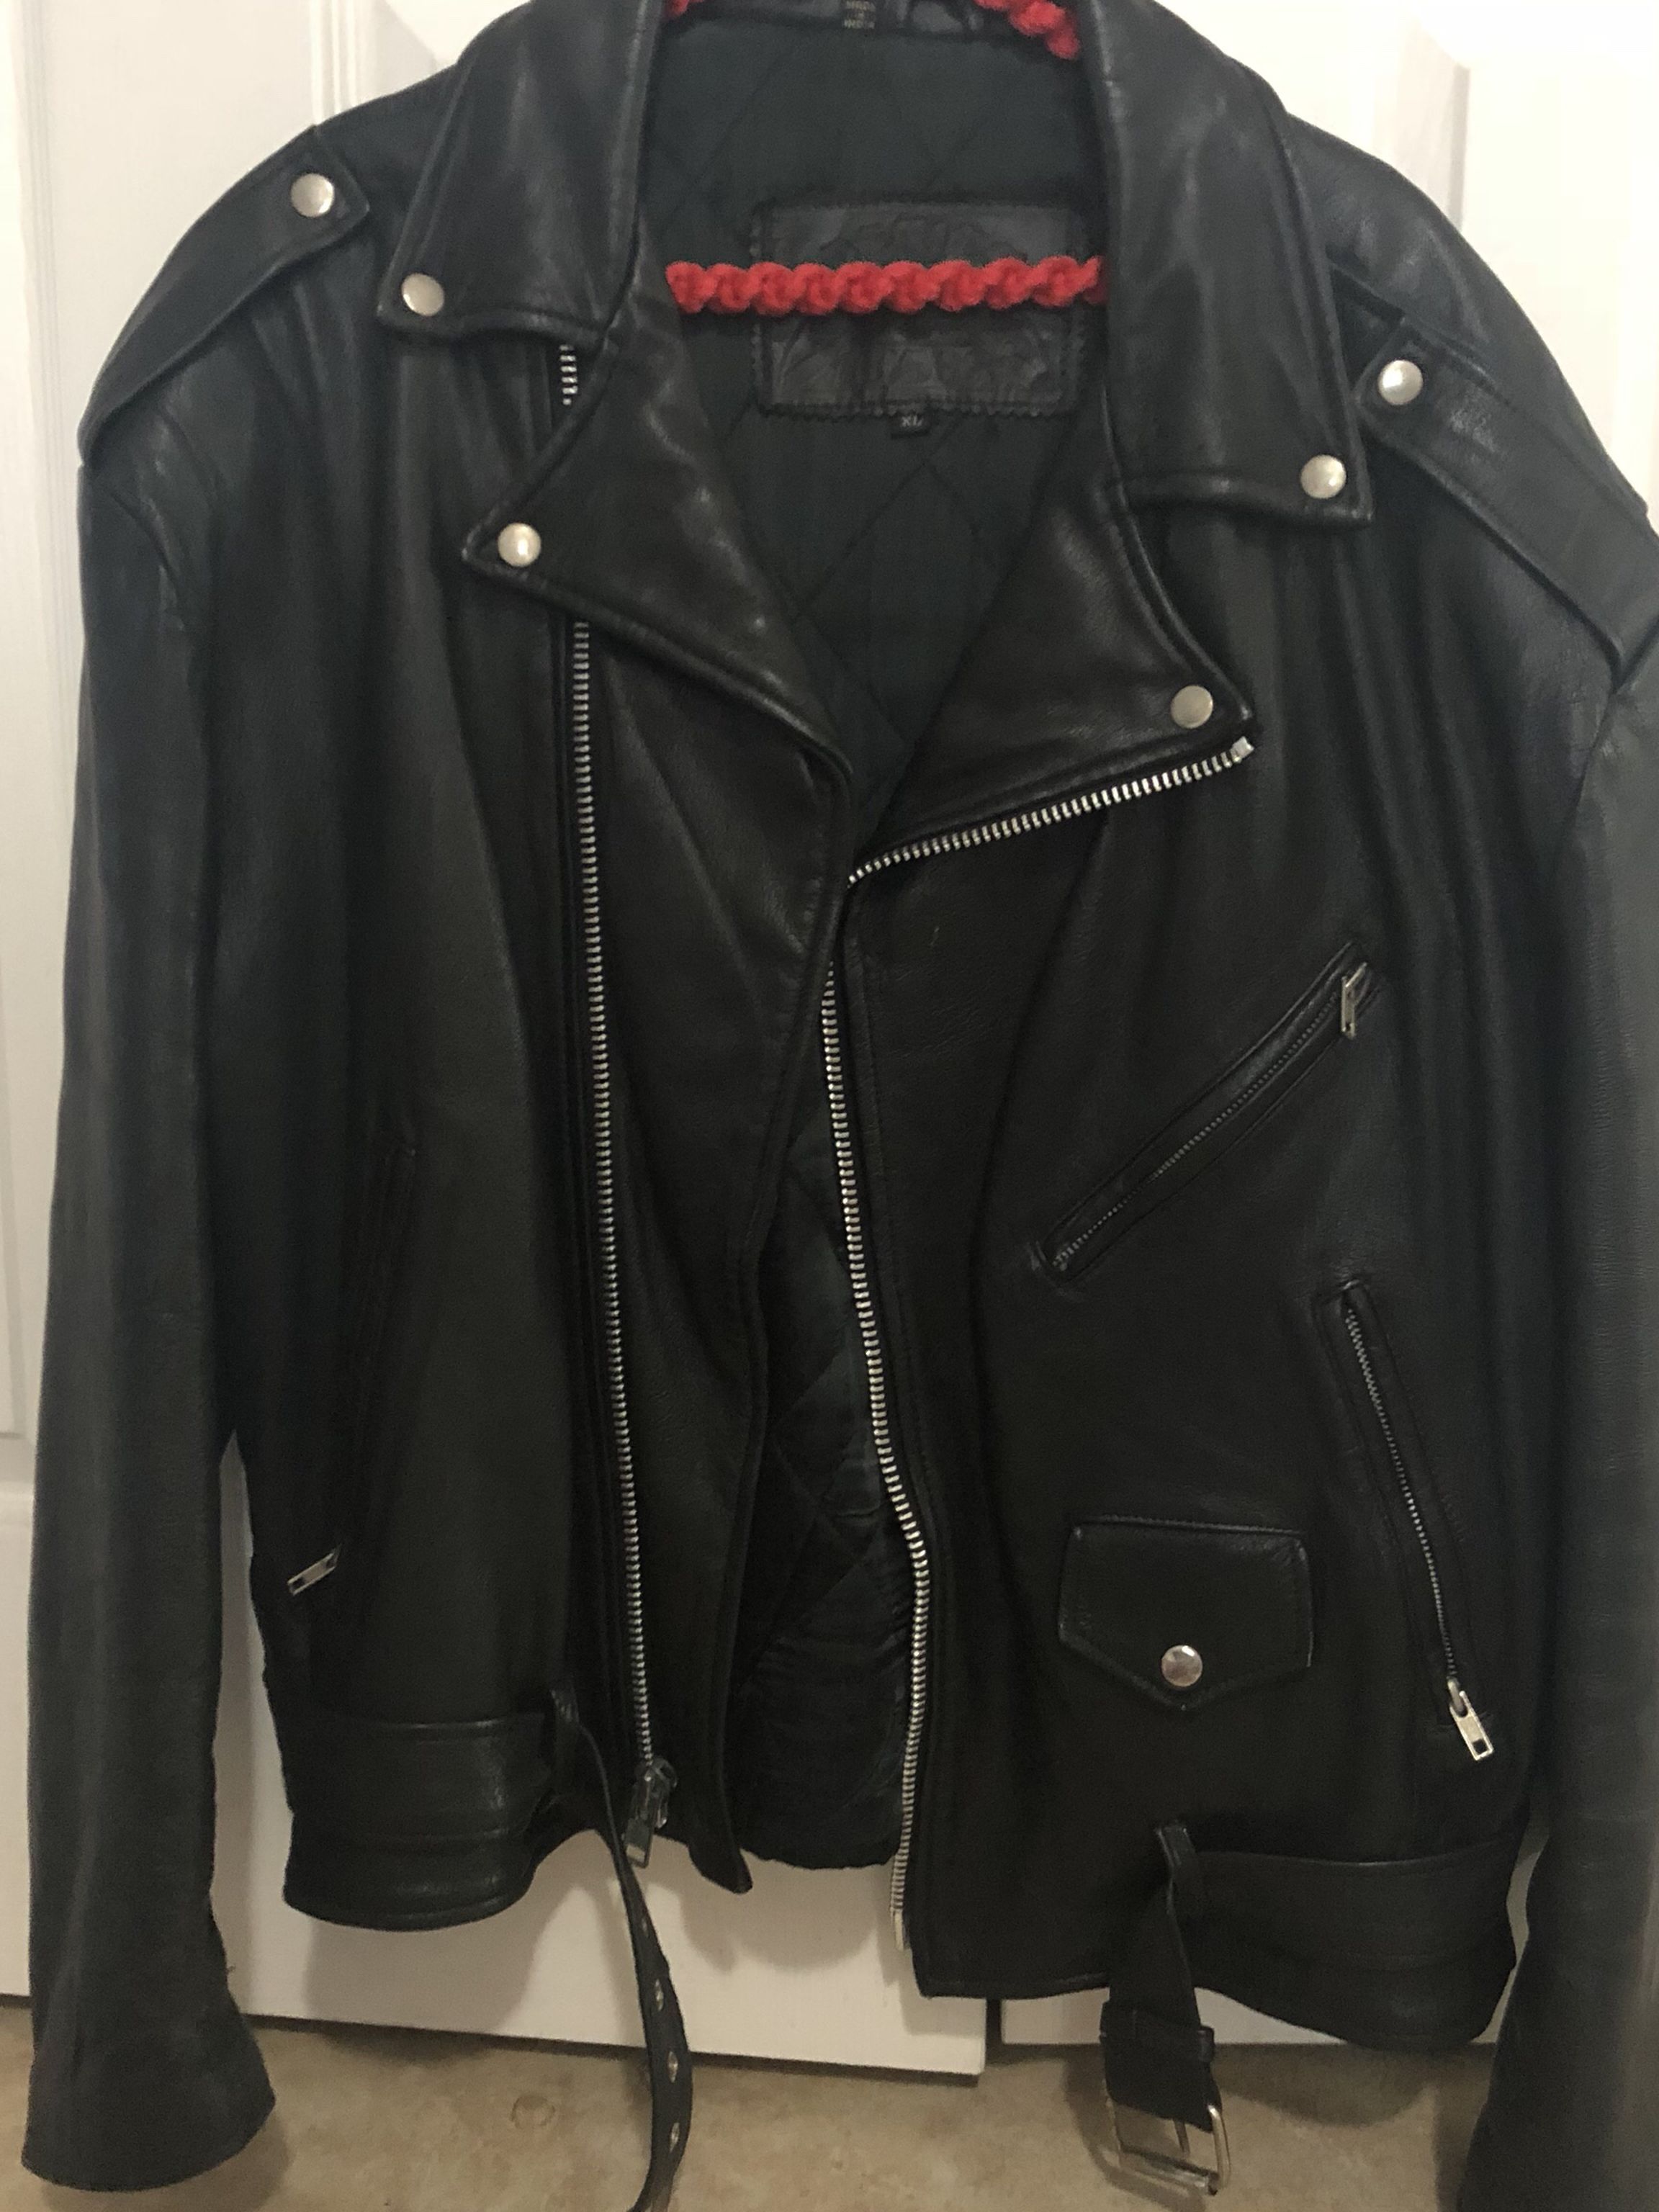 Biker Black Leather Jacket XL